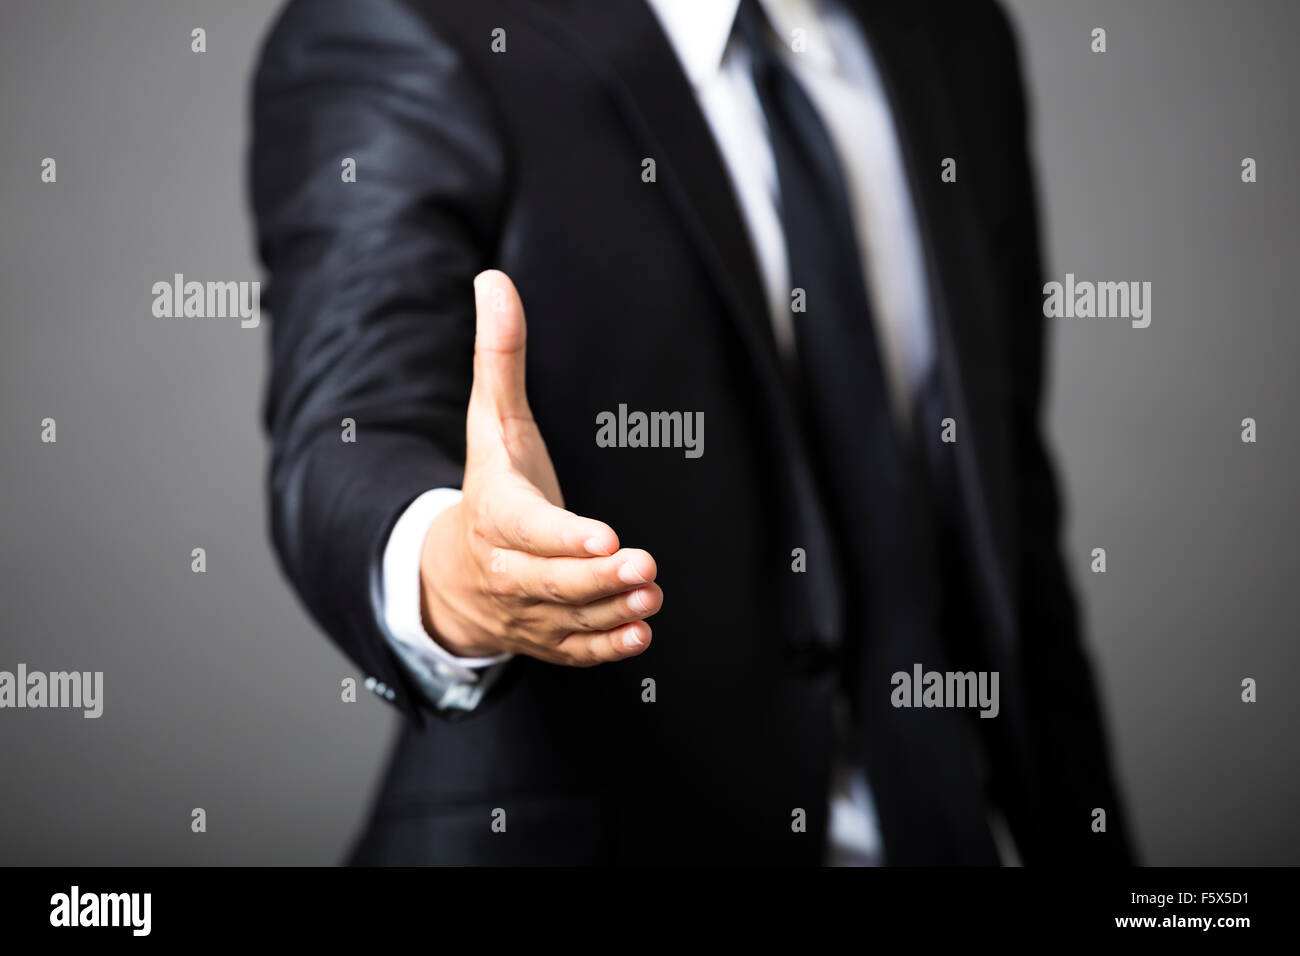 business man offering handshake Stock Photo